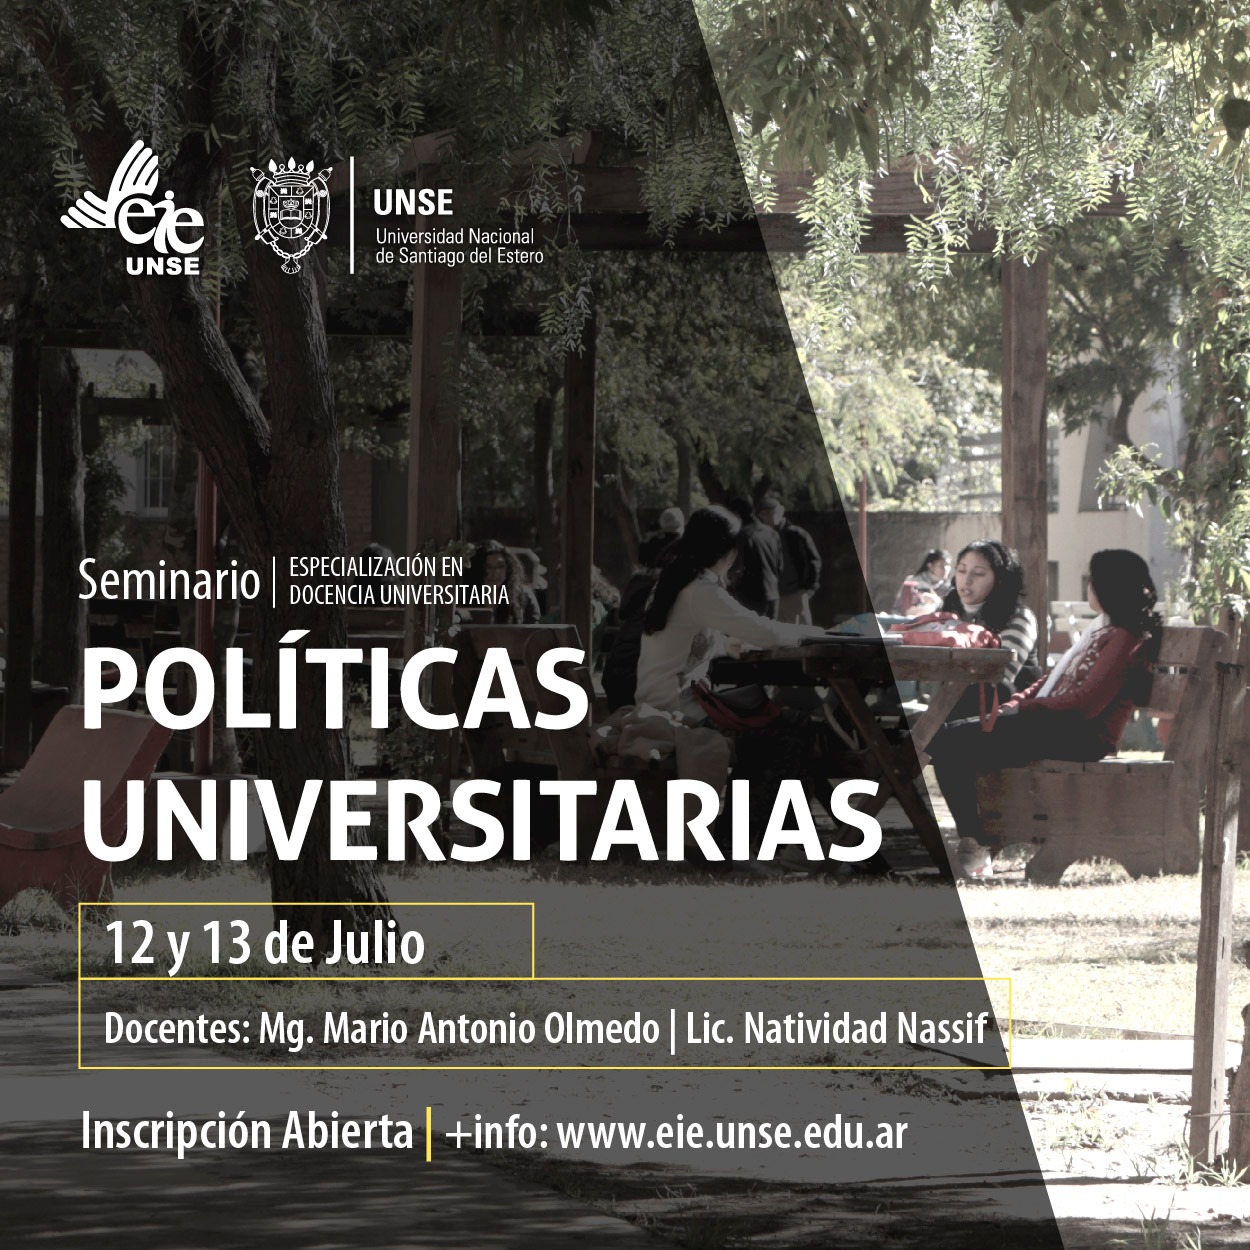 Seminario "Políticas Universitarias"